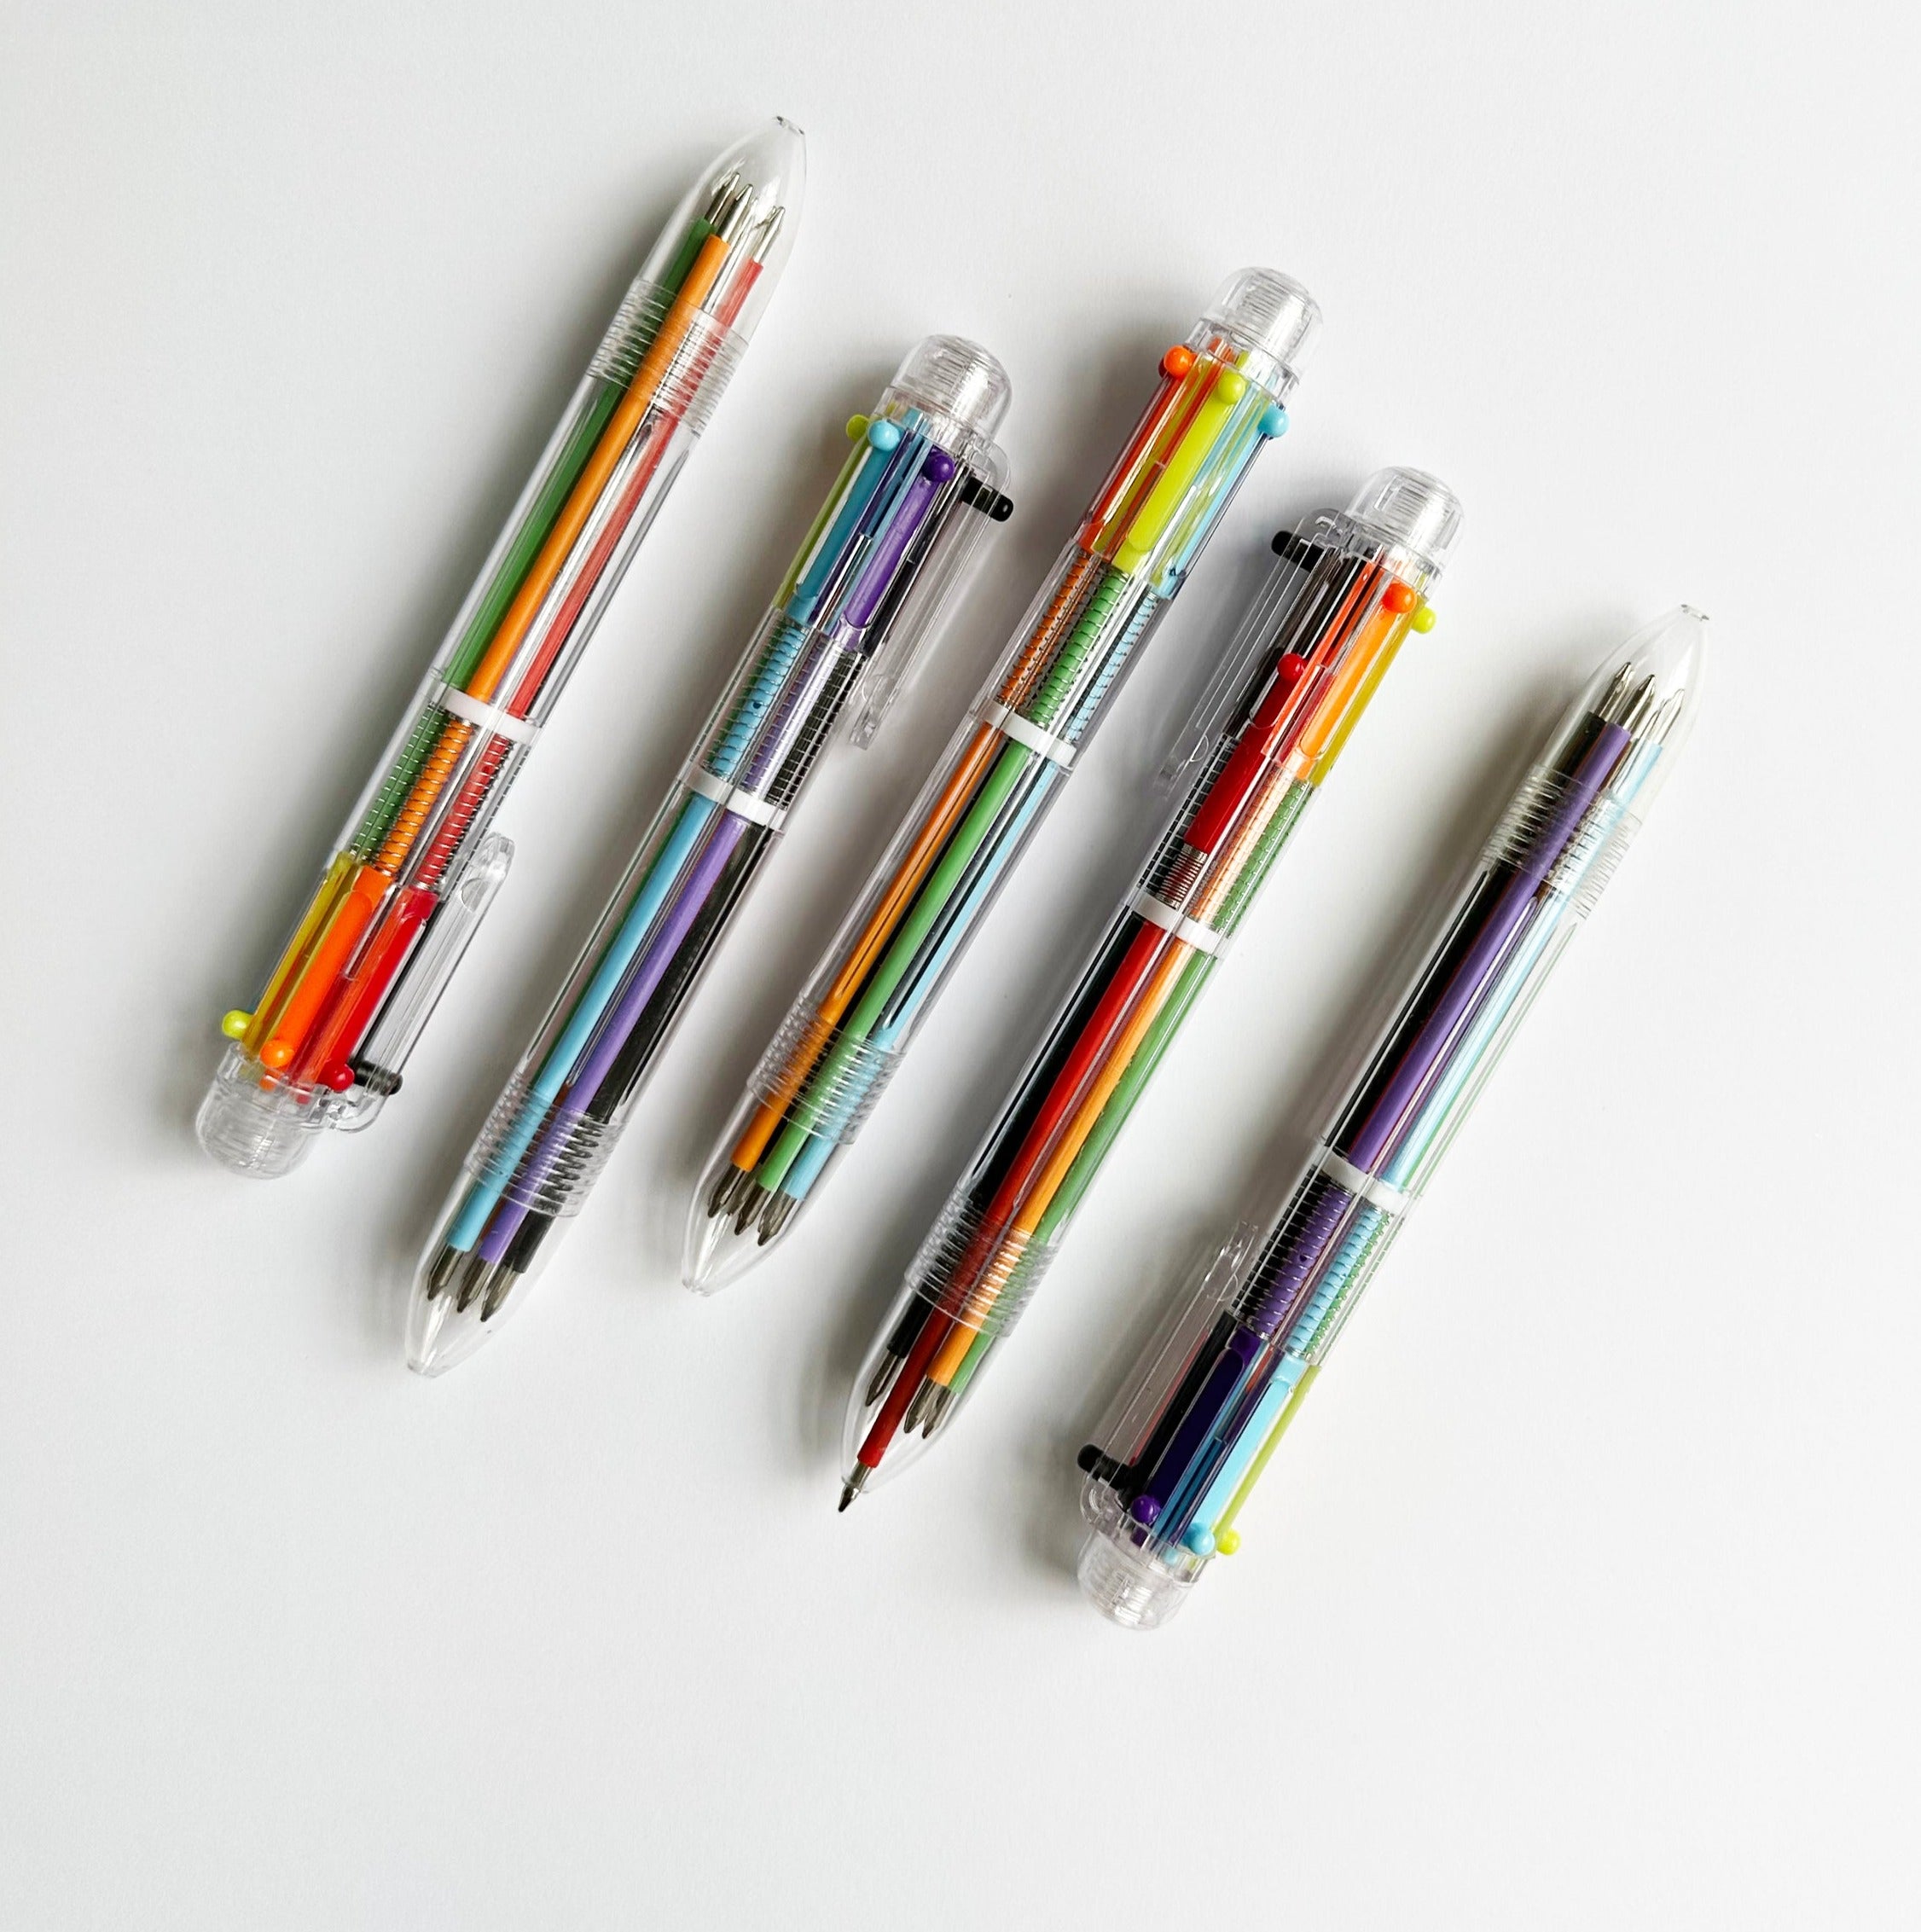 6-in-1 Multicolor Ballpoint Pen, Multicolor Pens, Multicolor Pen